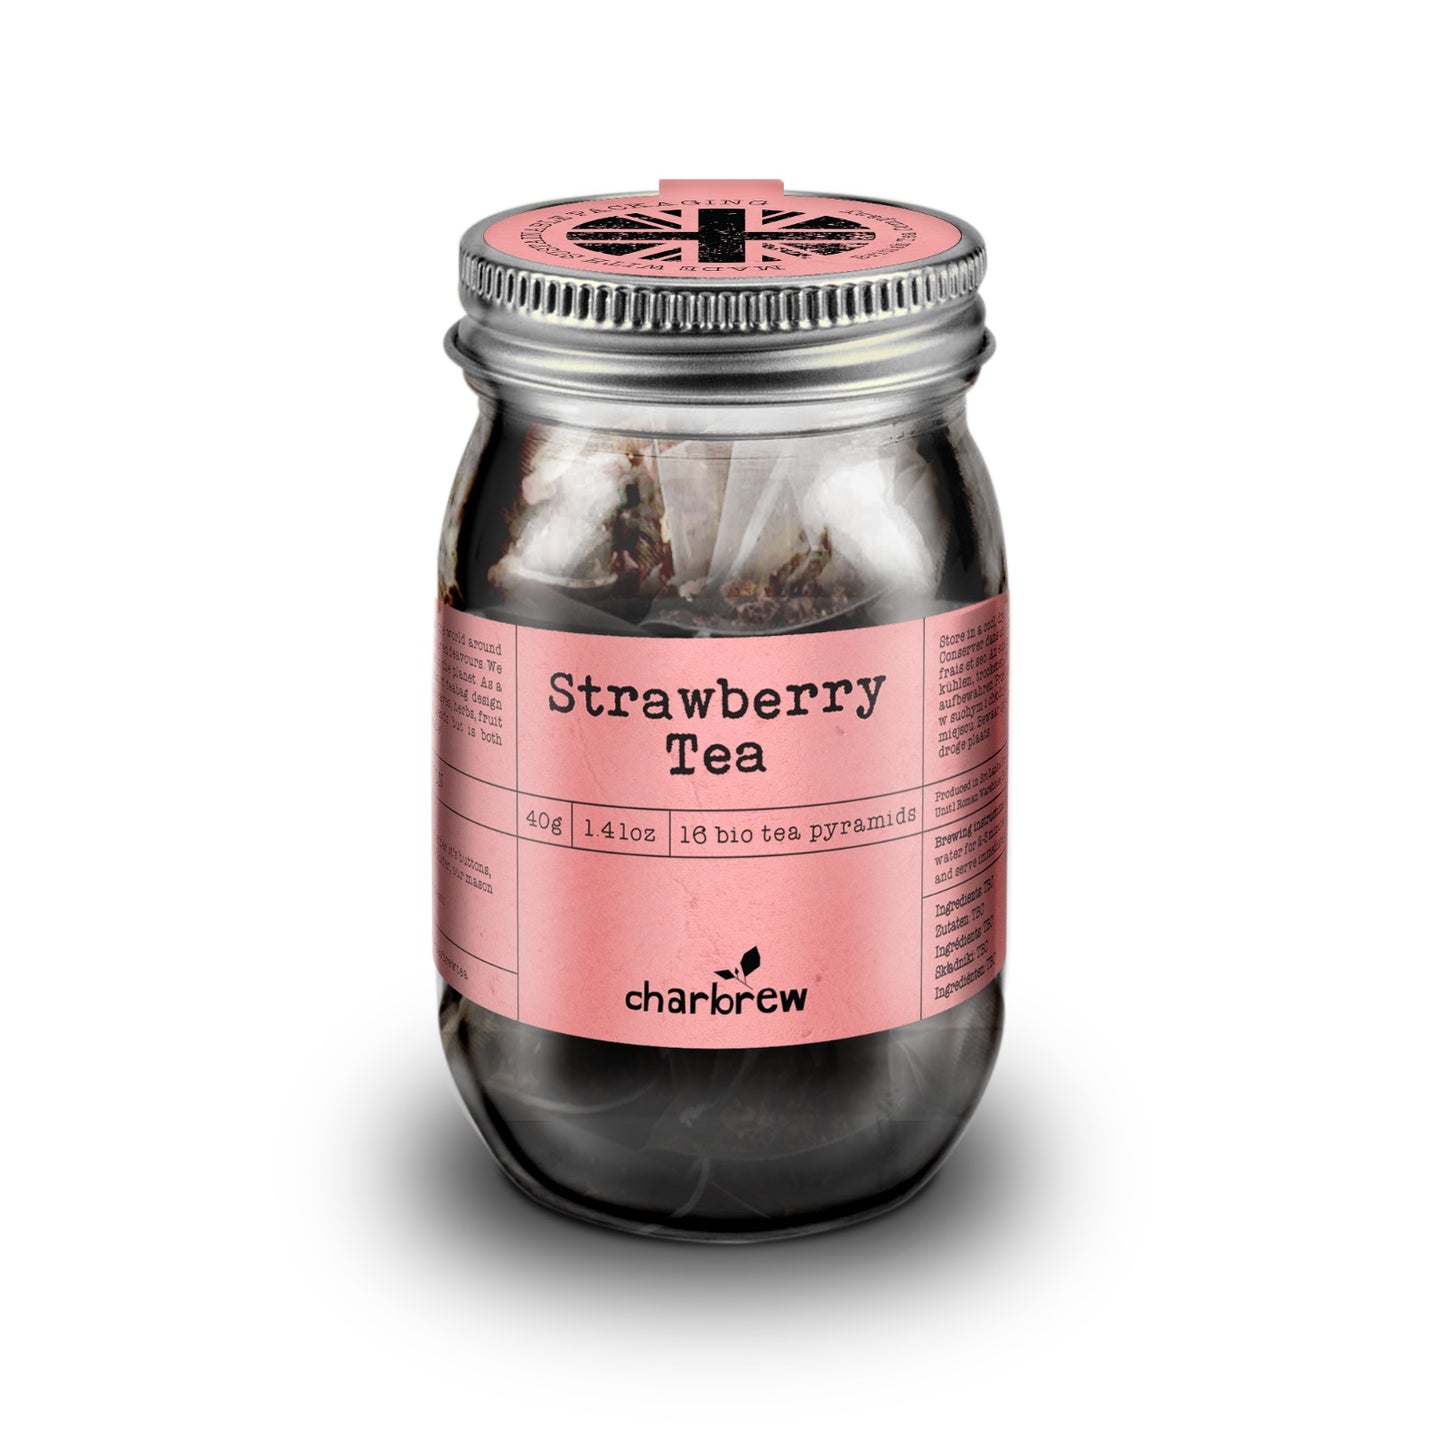 Strawberry Tea Bags Mason Jar - 16 Biodegradable Pyramid Bags